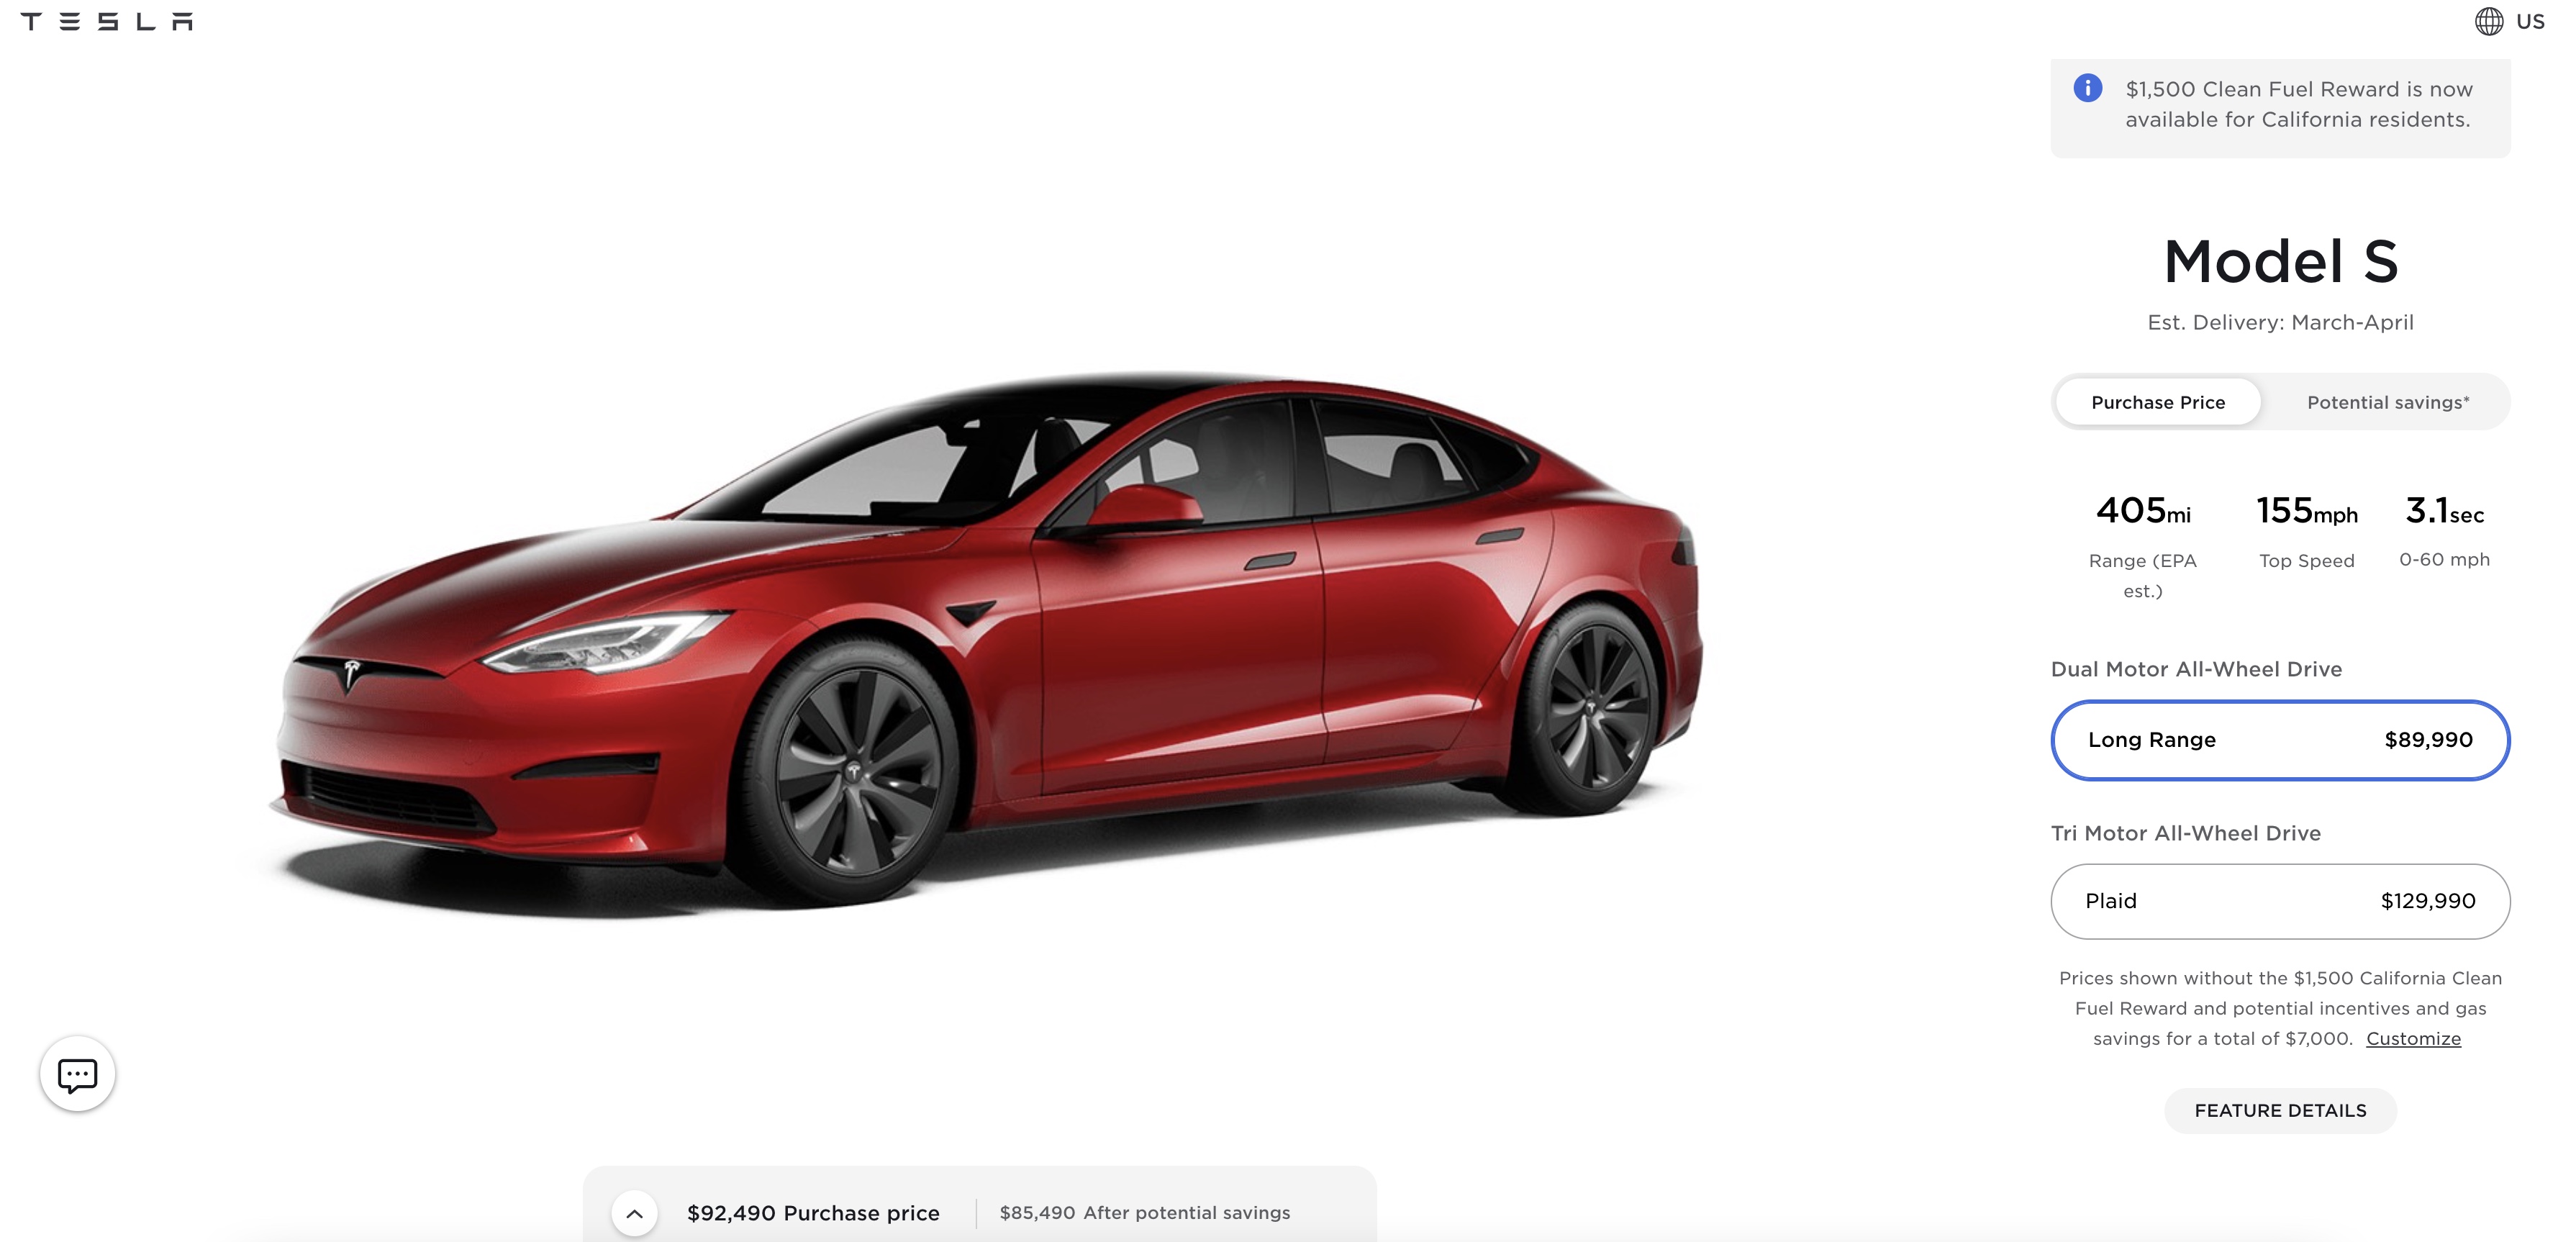 Tesla increases Model S $5,000 -